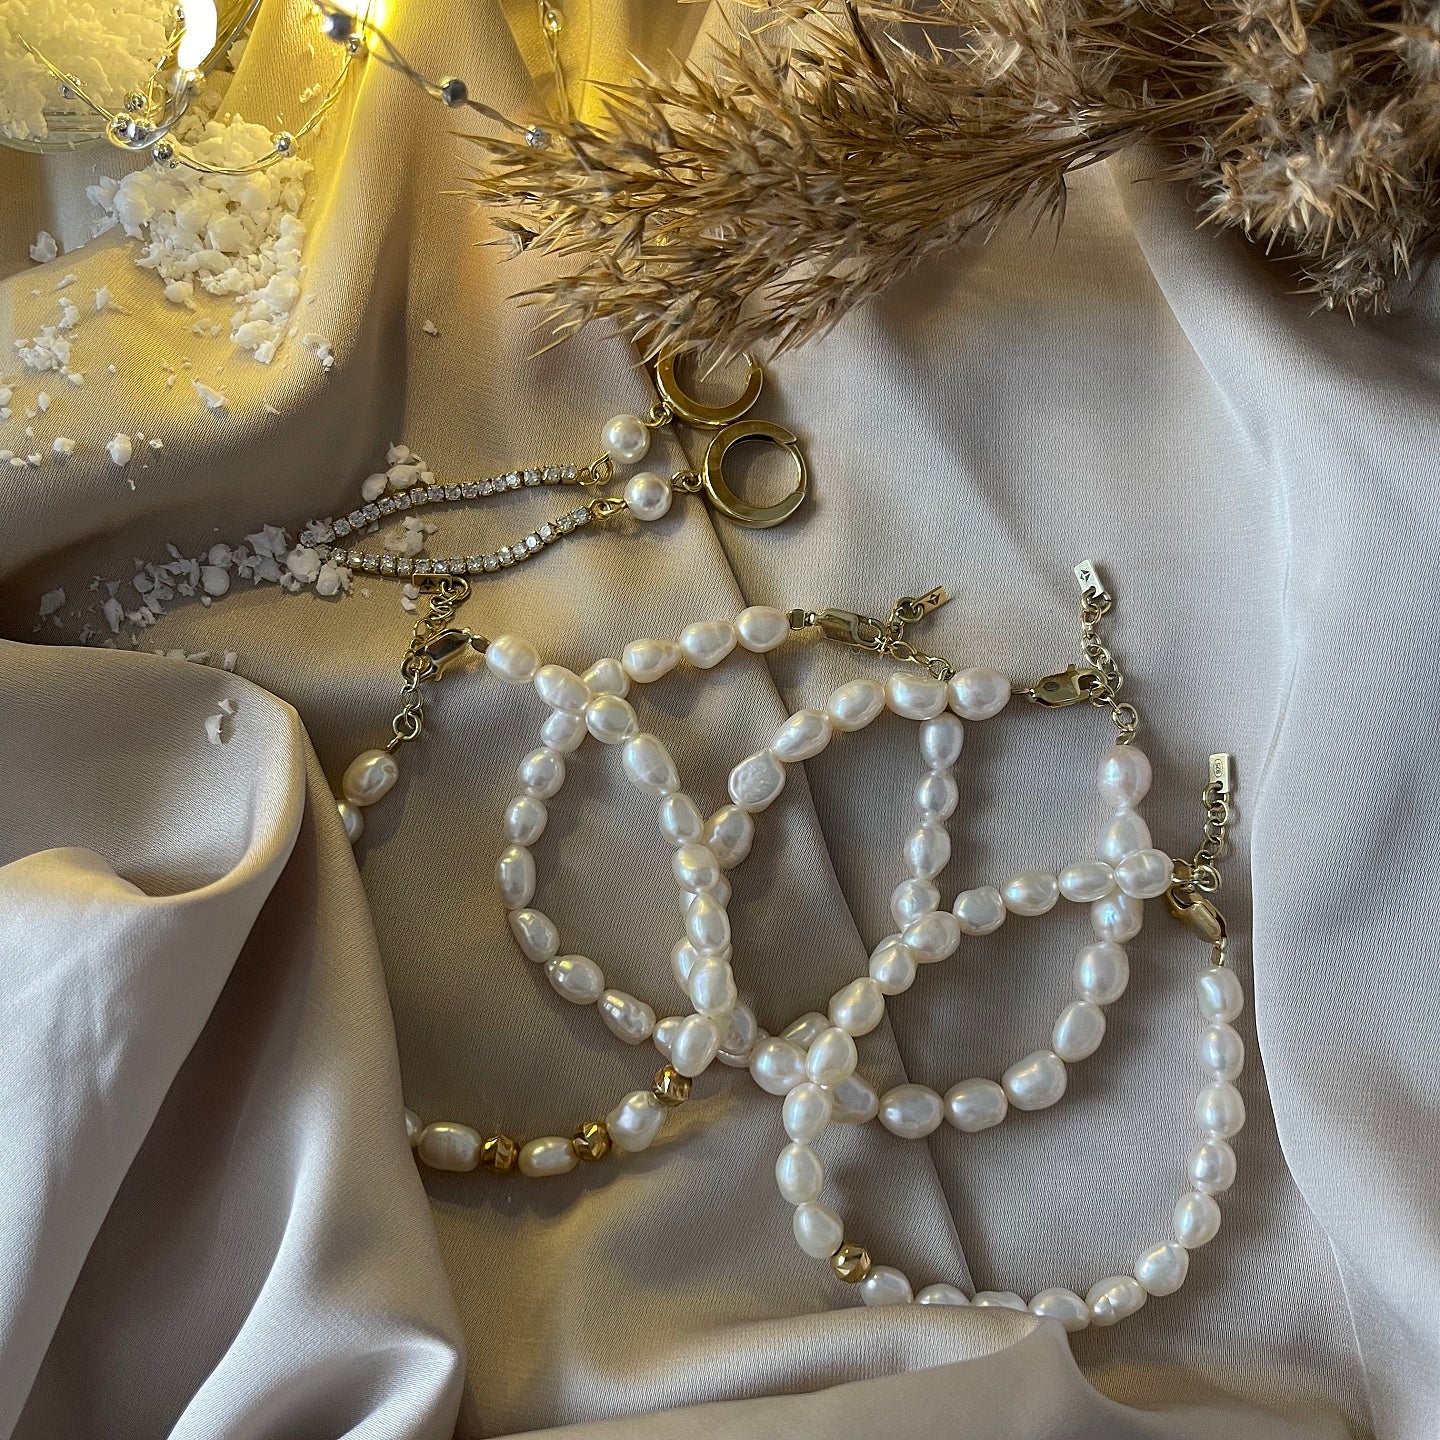 Bratara perle argint Classy Sassy - placata aur galben 18K